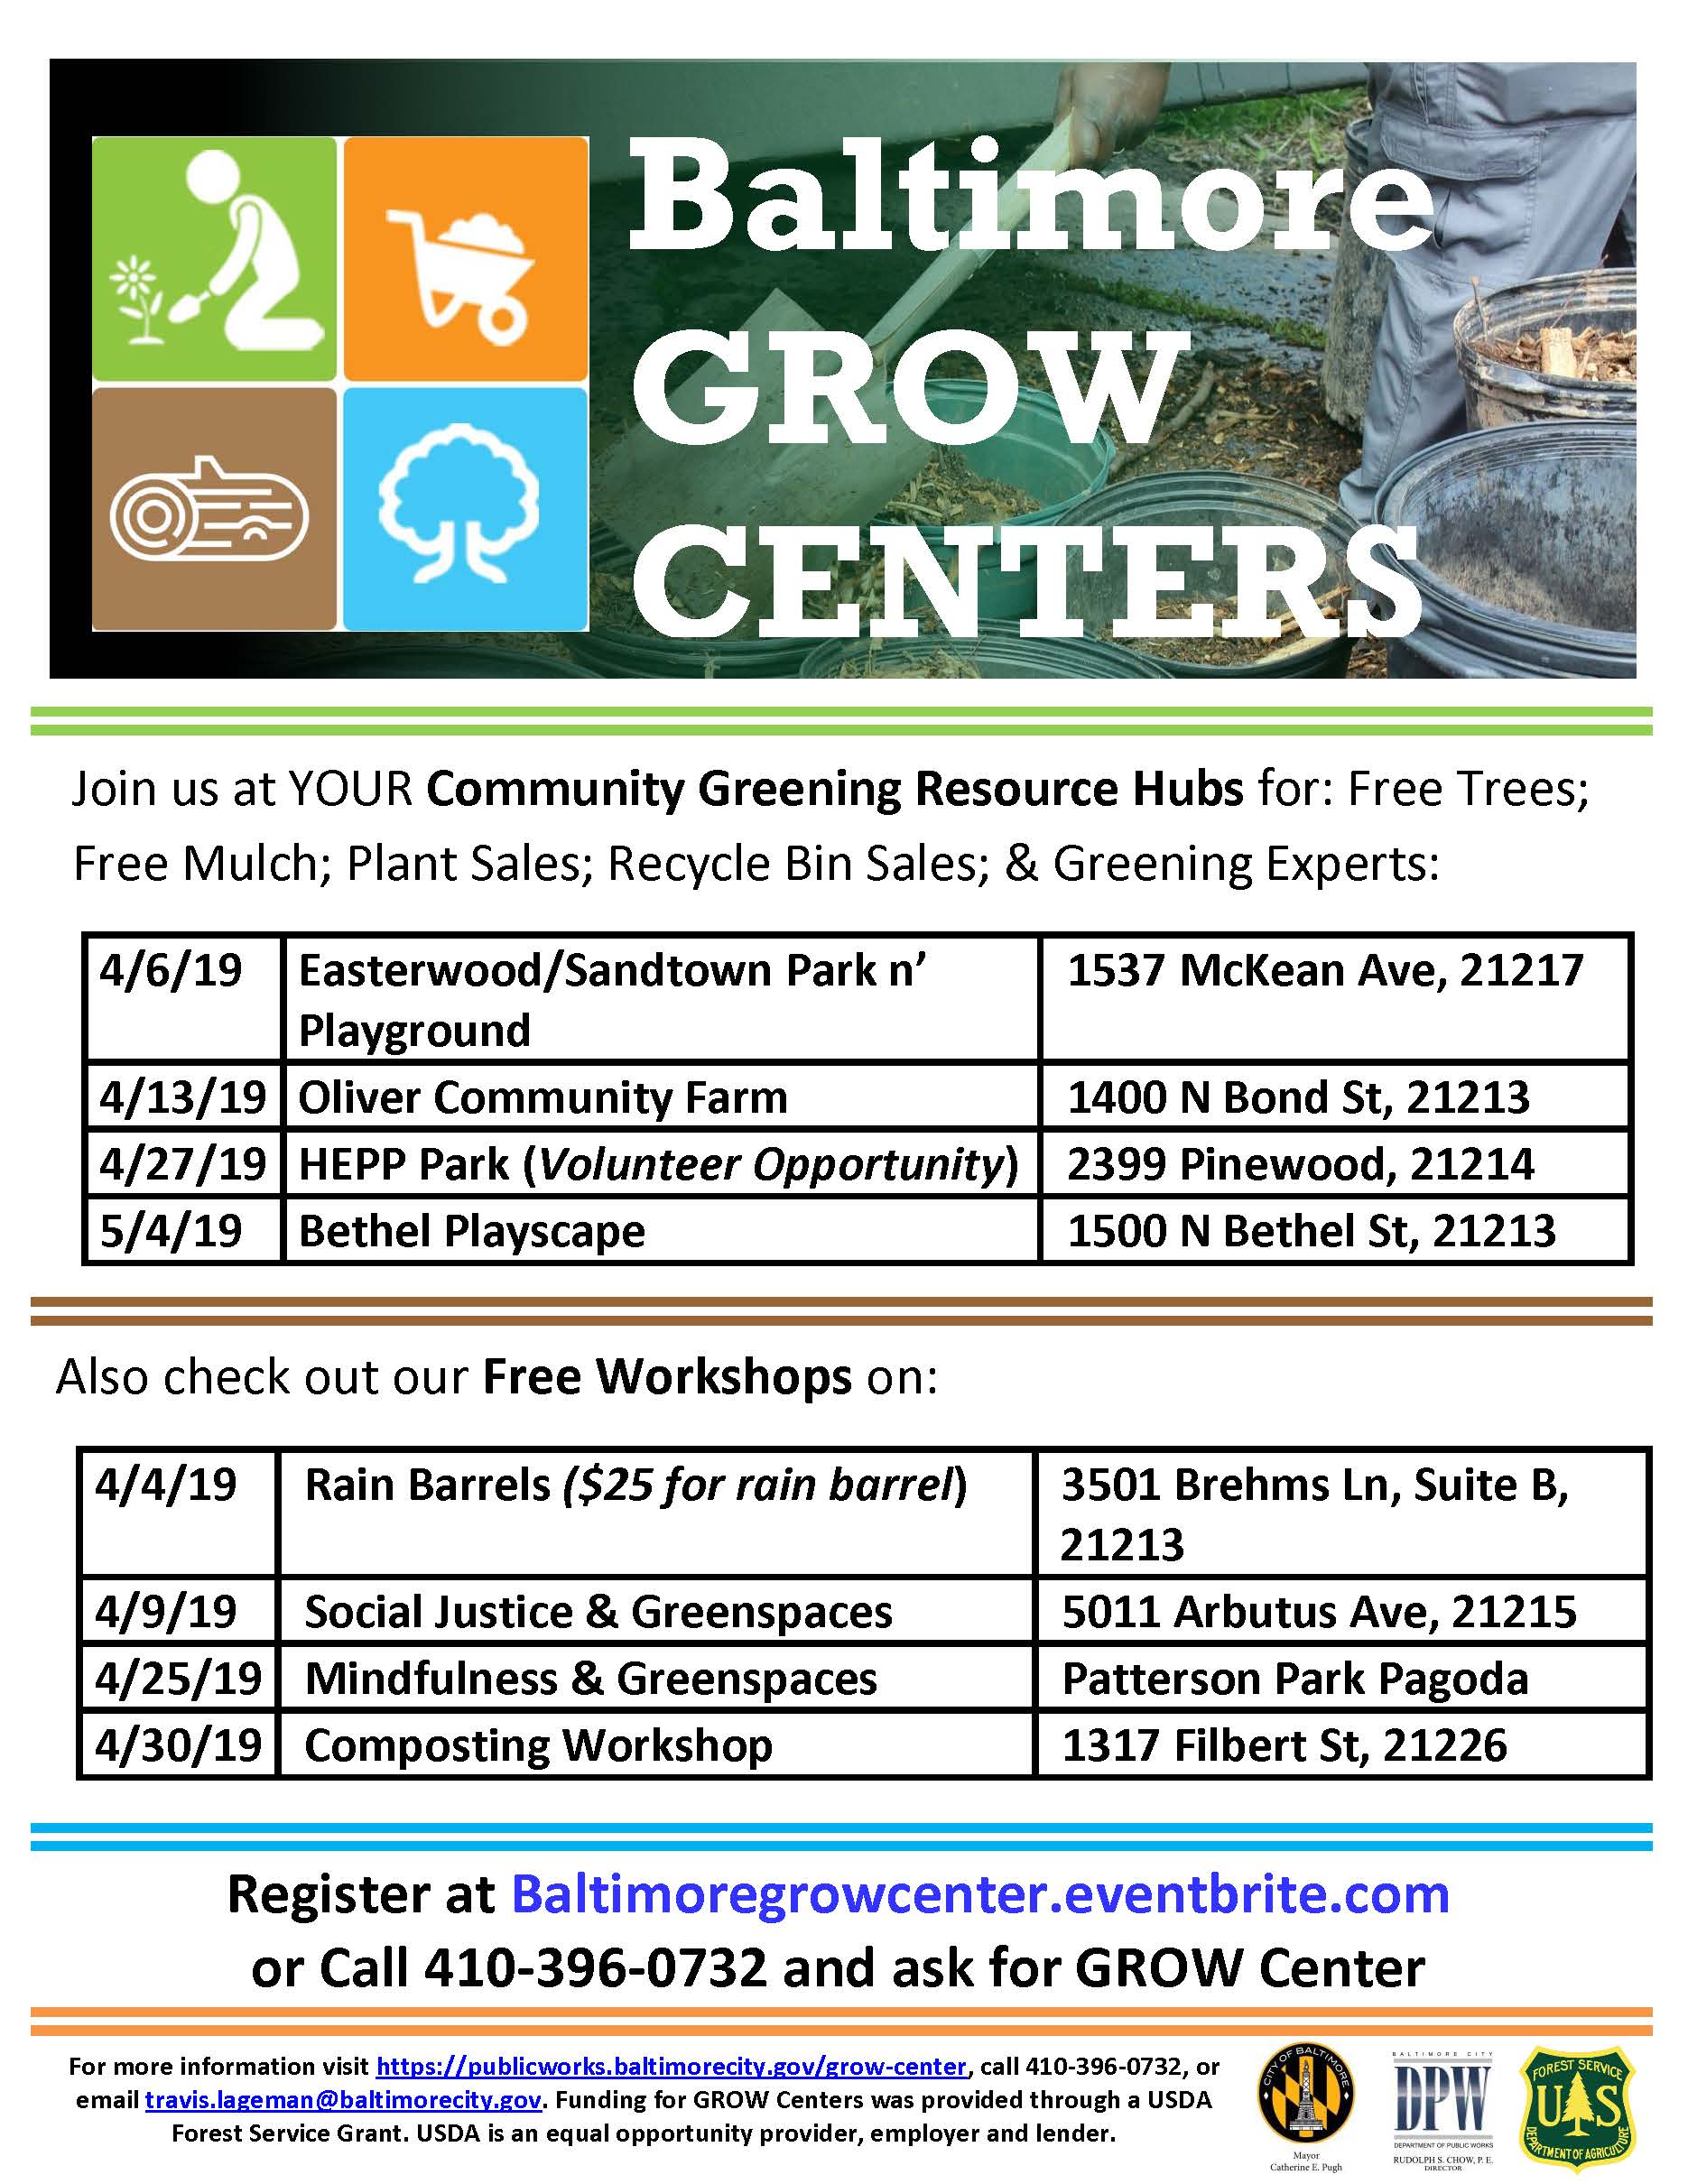 April 13 Grow Center Pop-up: Oliver Community Farm